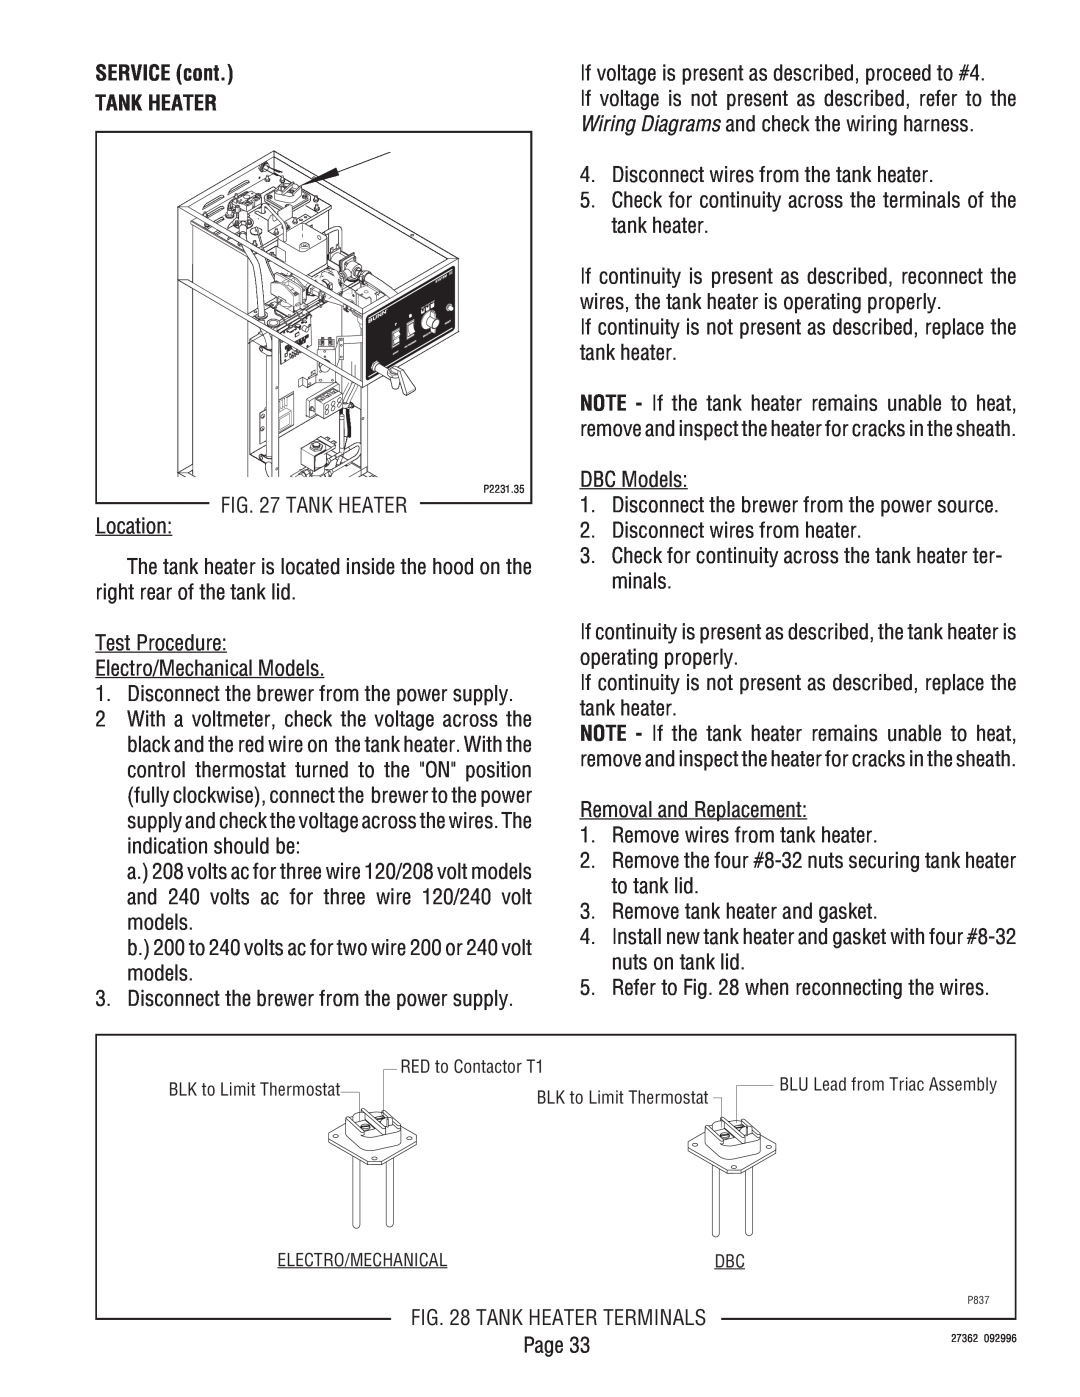 Bunn System III manual SERVICE cont TANK HEATER, Tank Heater, Location 